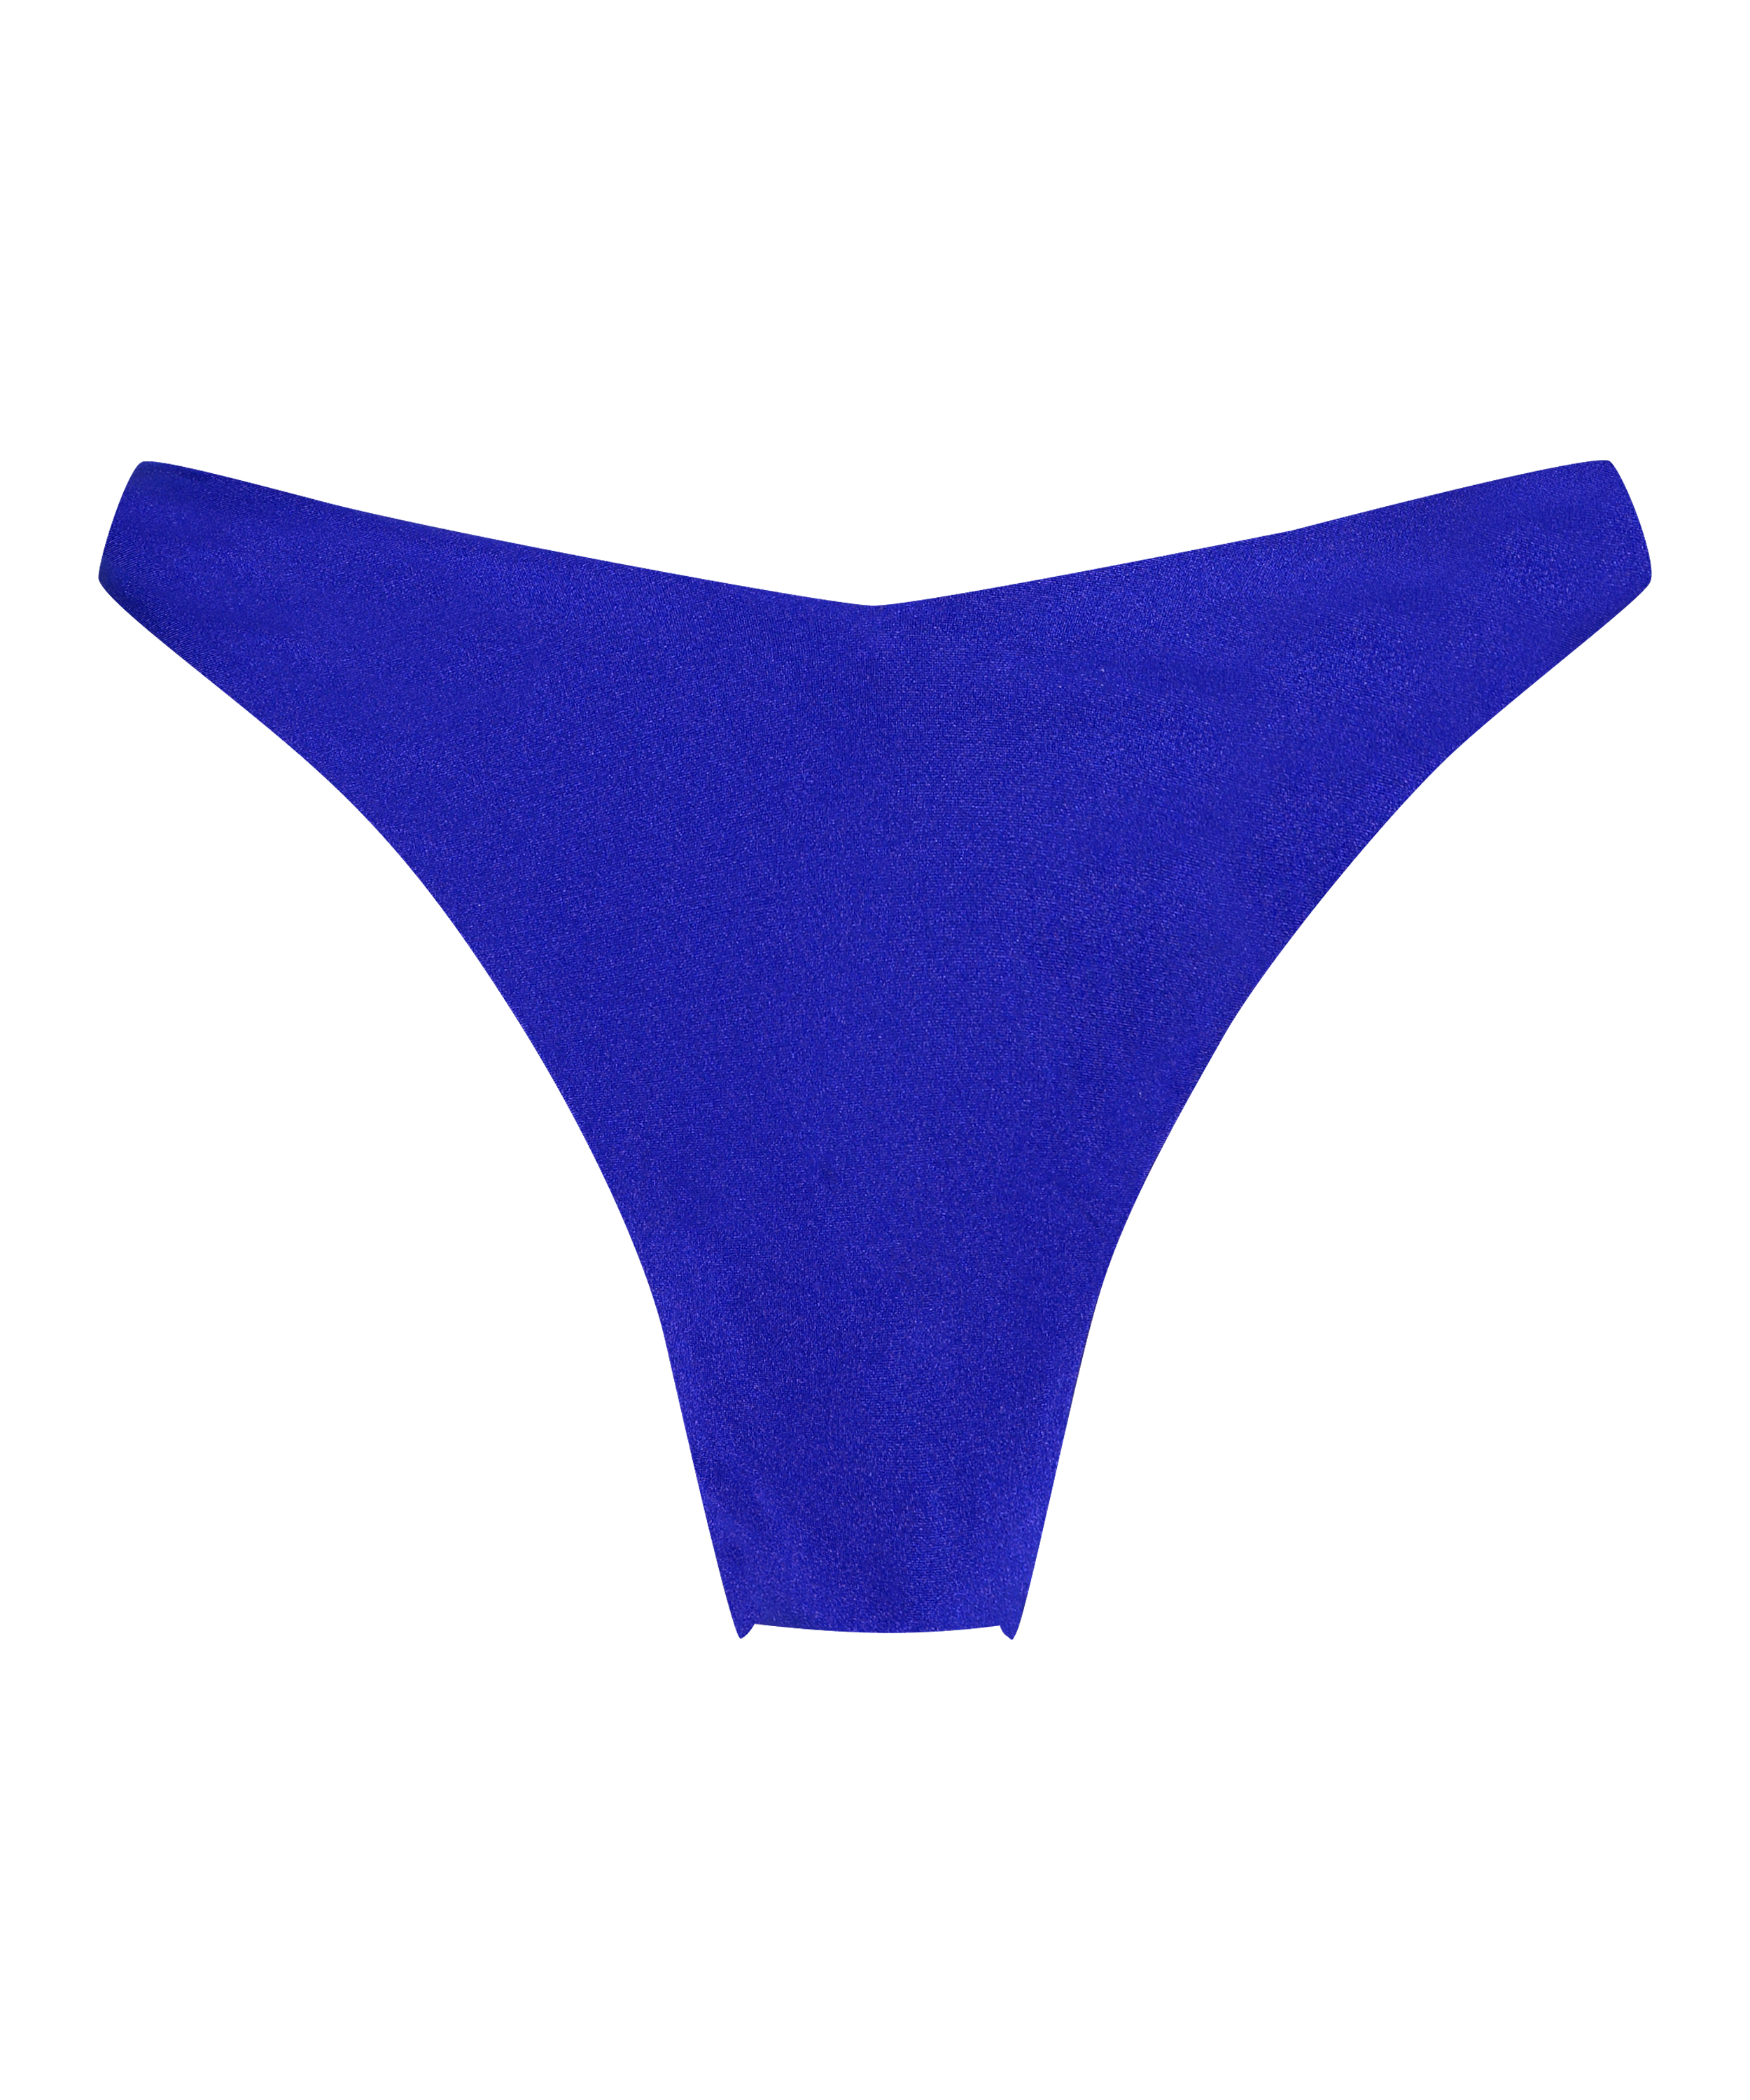 Braguita de Bikini de Corte Alto Bari, Azul, main